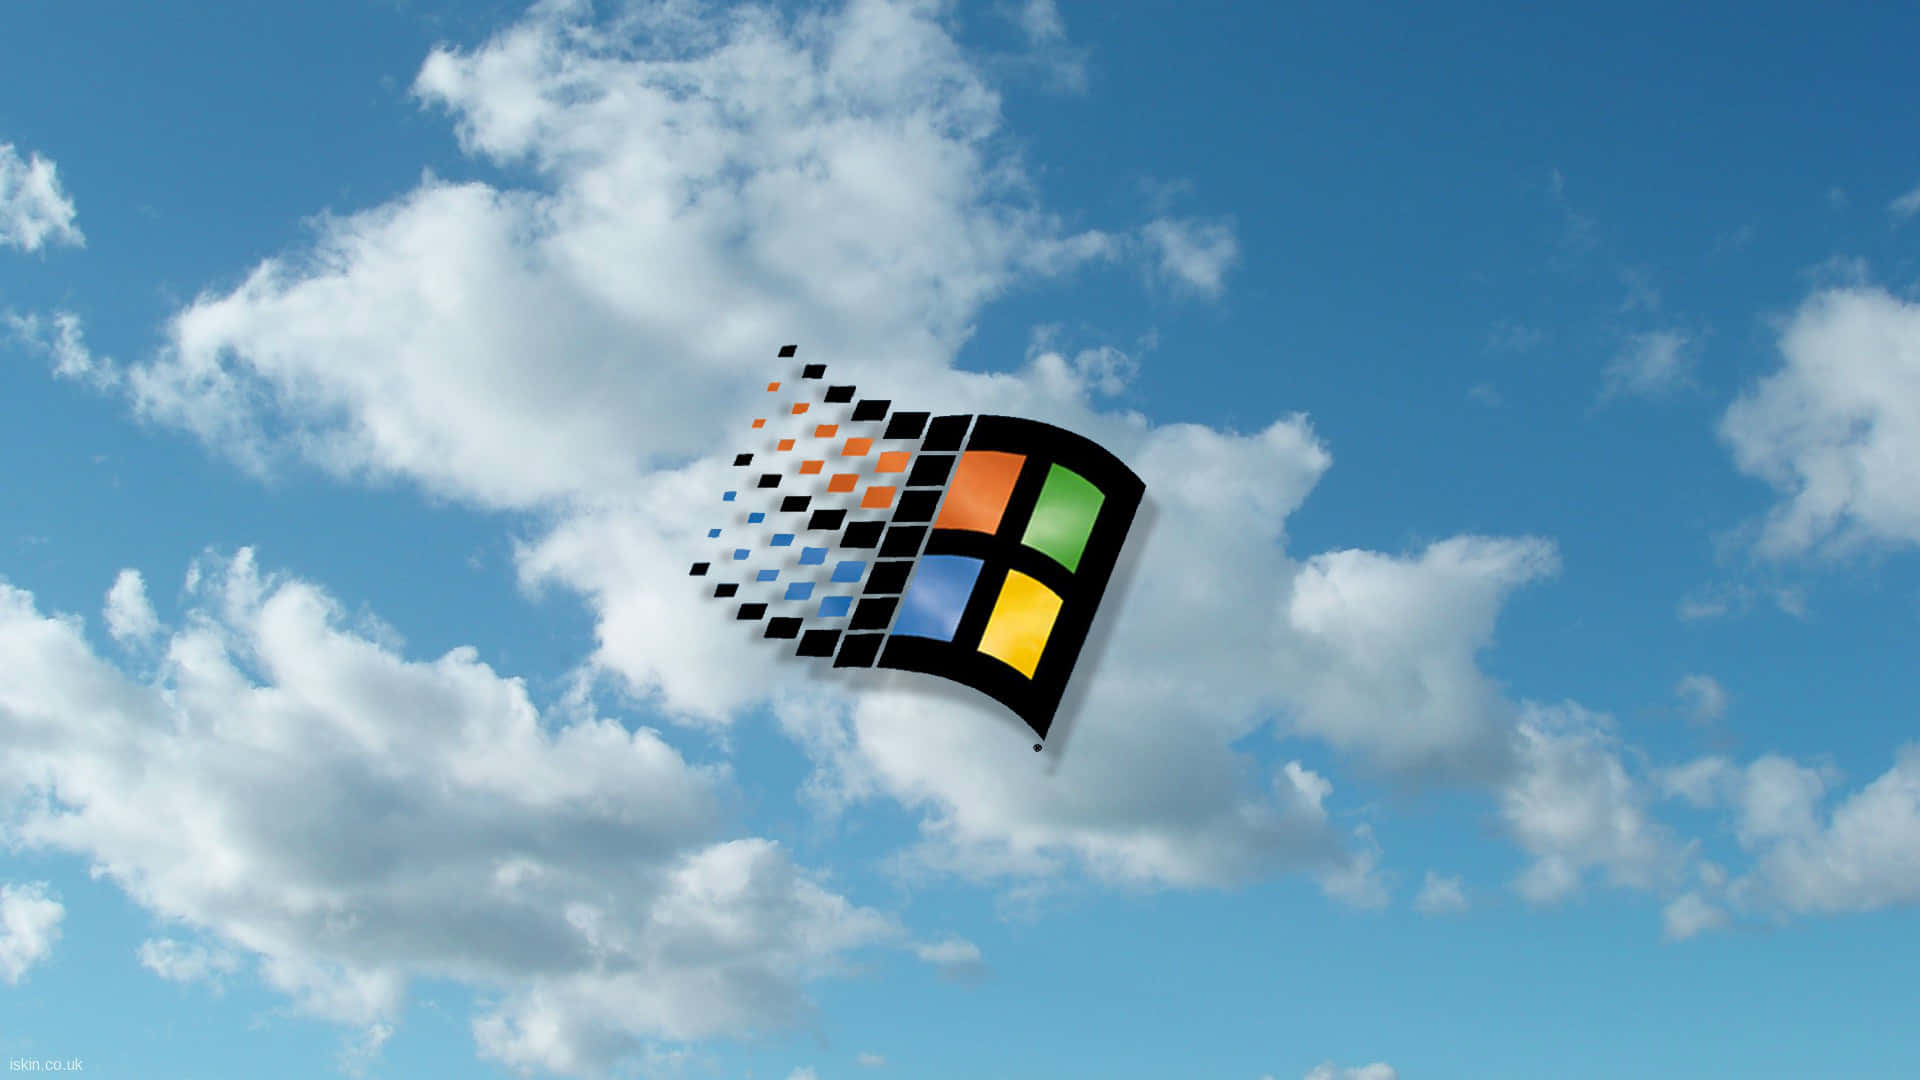 Windows 95 logo in the sky - Windows 98, Windows 95